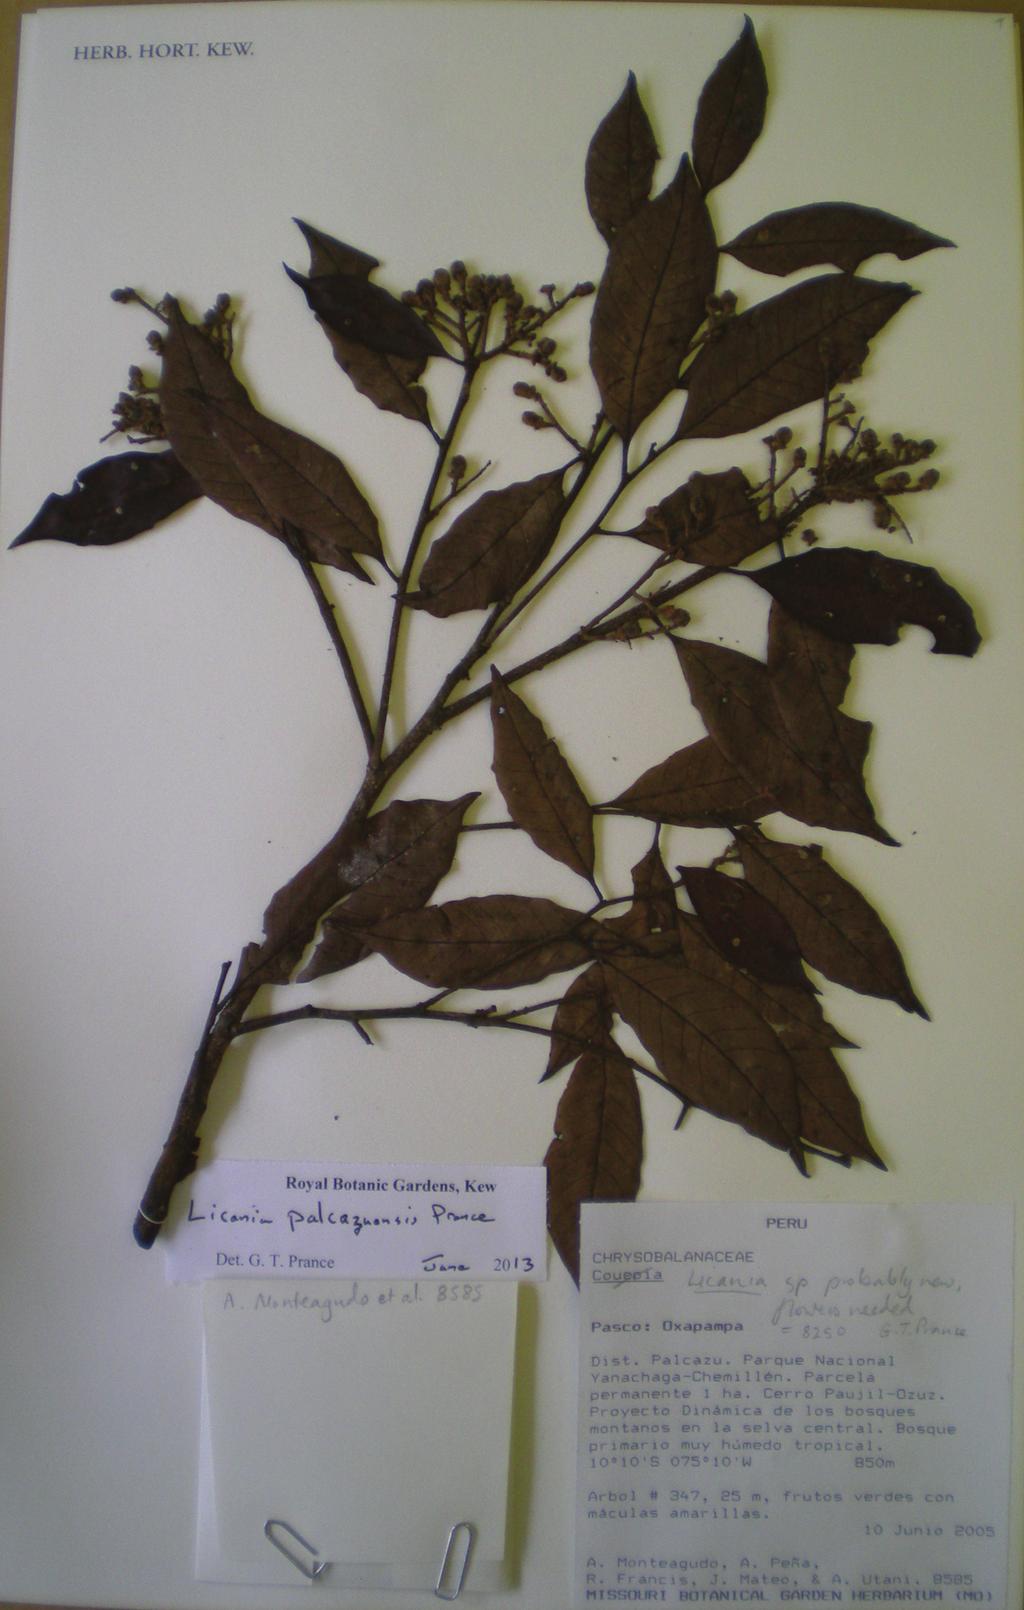 Three new species of Licania (Chrysobalanaceae) from Peru Figure 1.